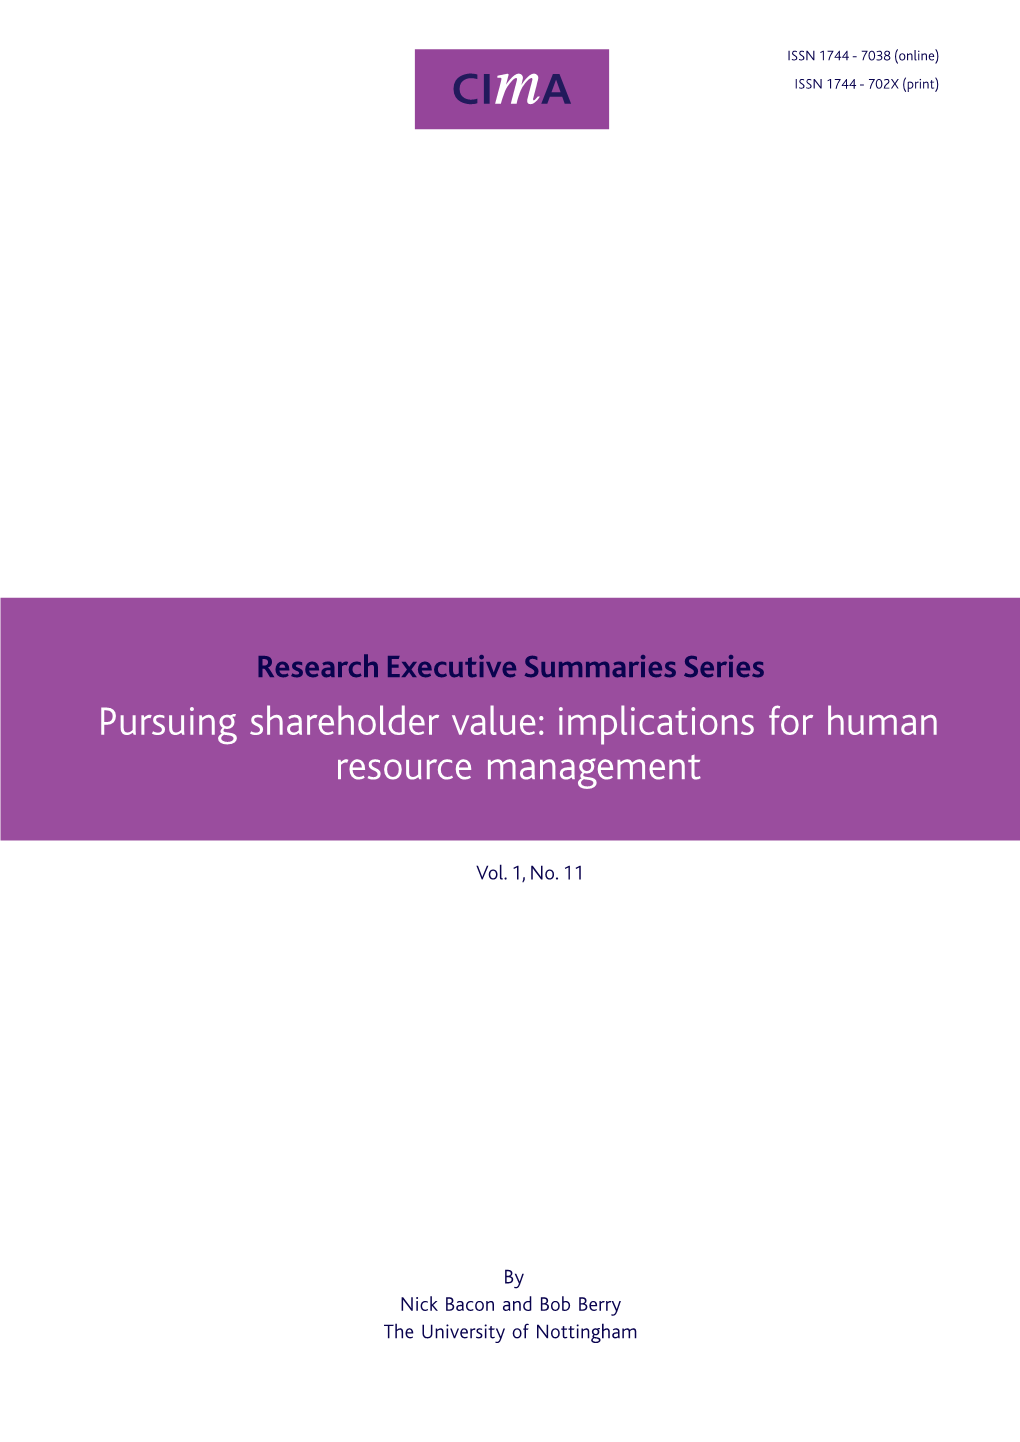 Pursuing Shareholder Value: Implications for Human Resource Management